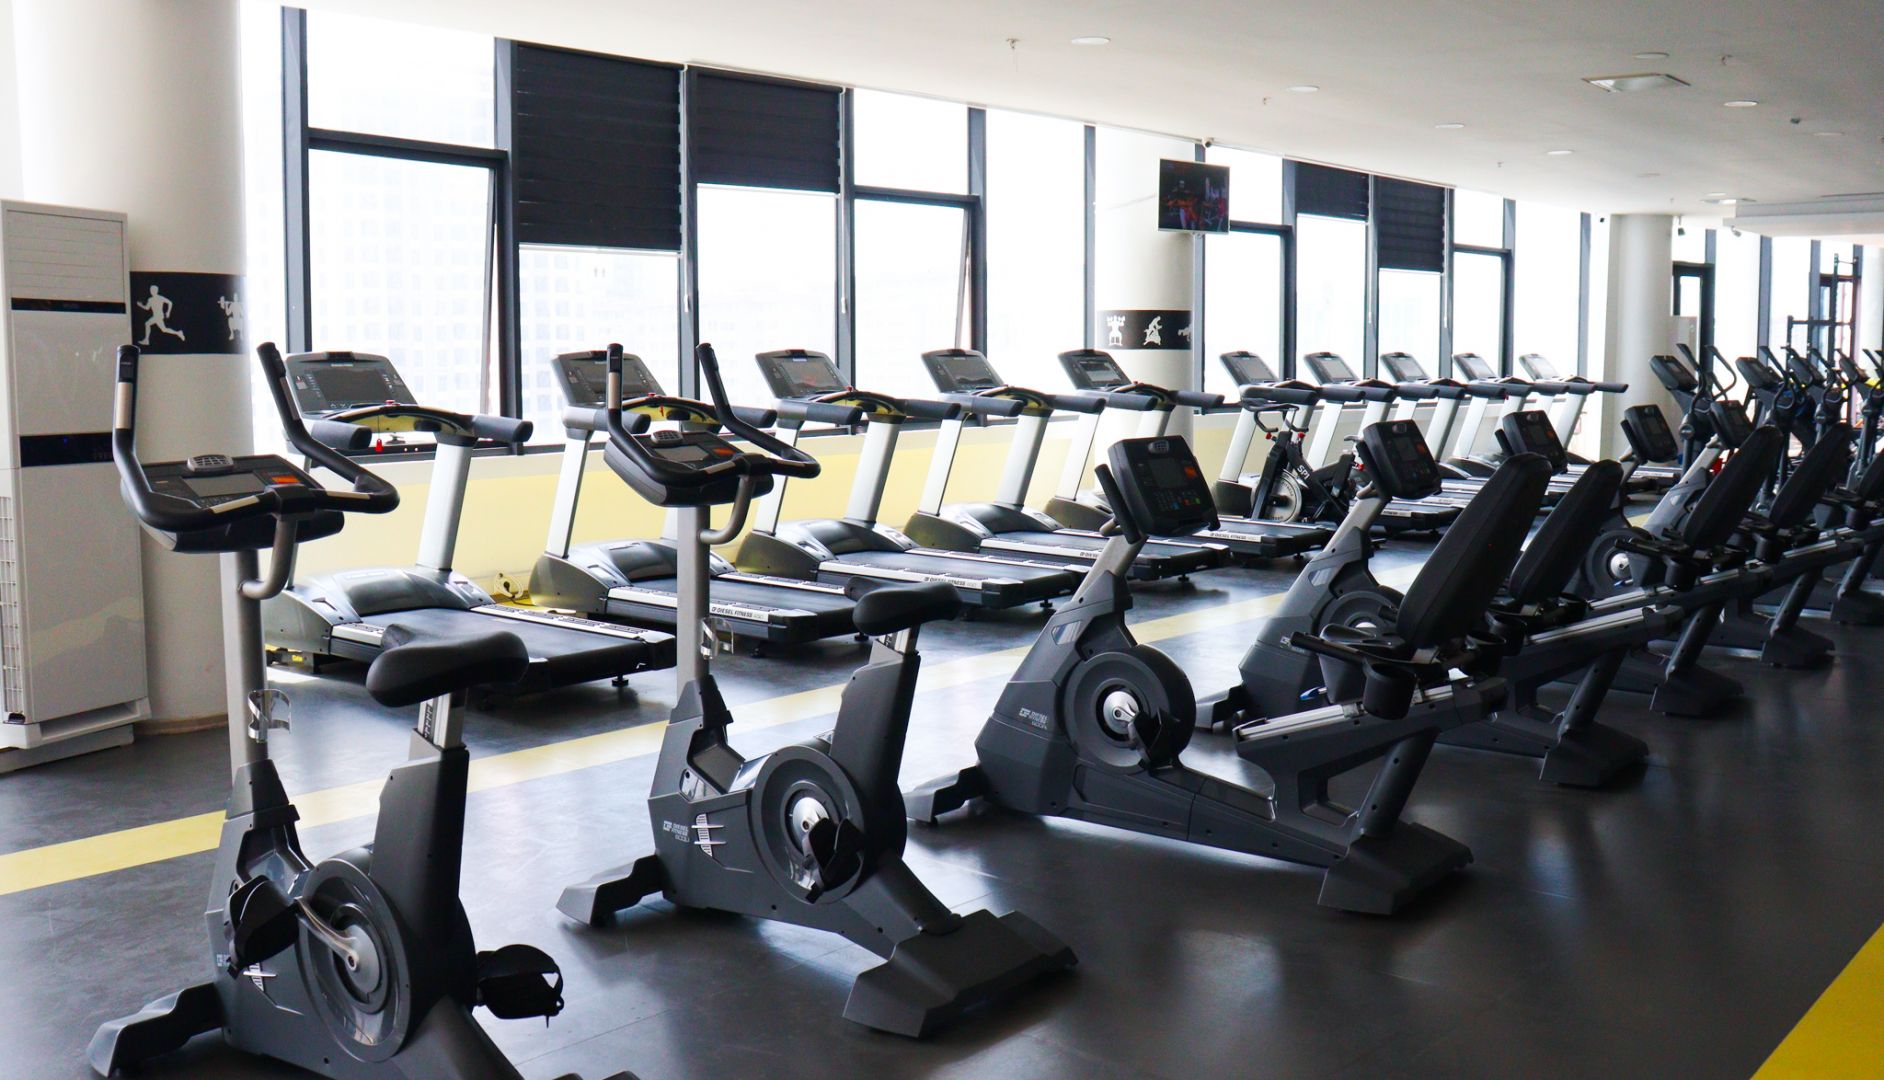 Esenyurt'un Eşsiz Fitness Deneyimi: The Gym A Plus Spa & Fitness